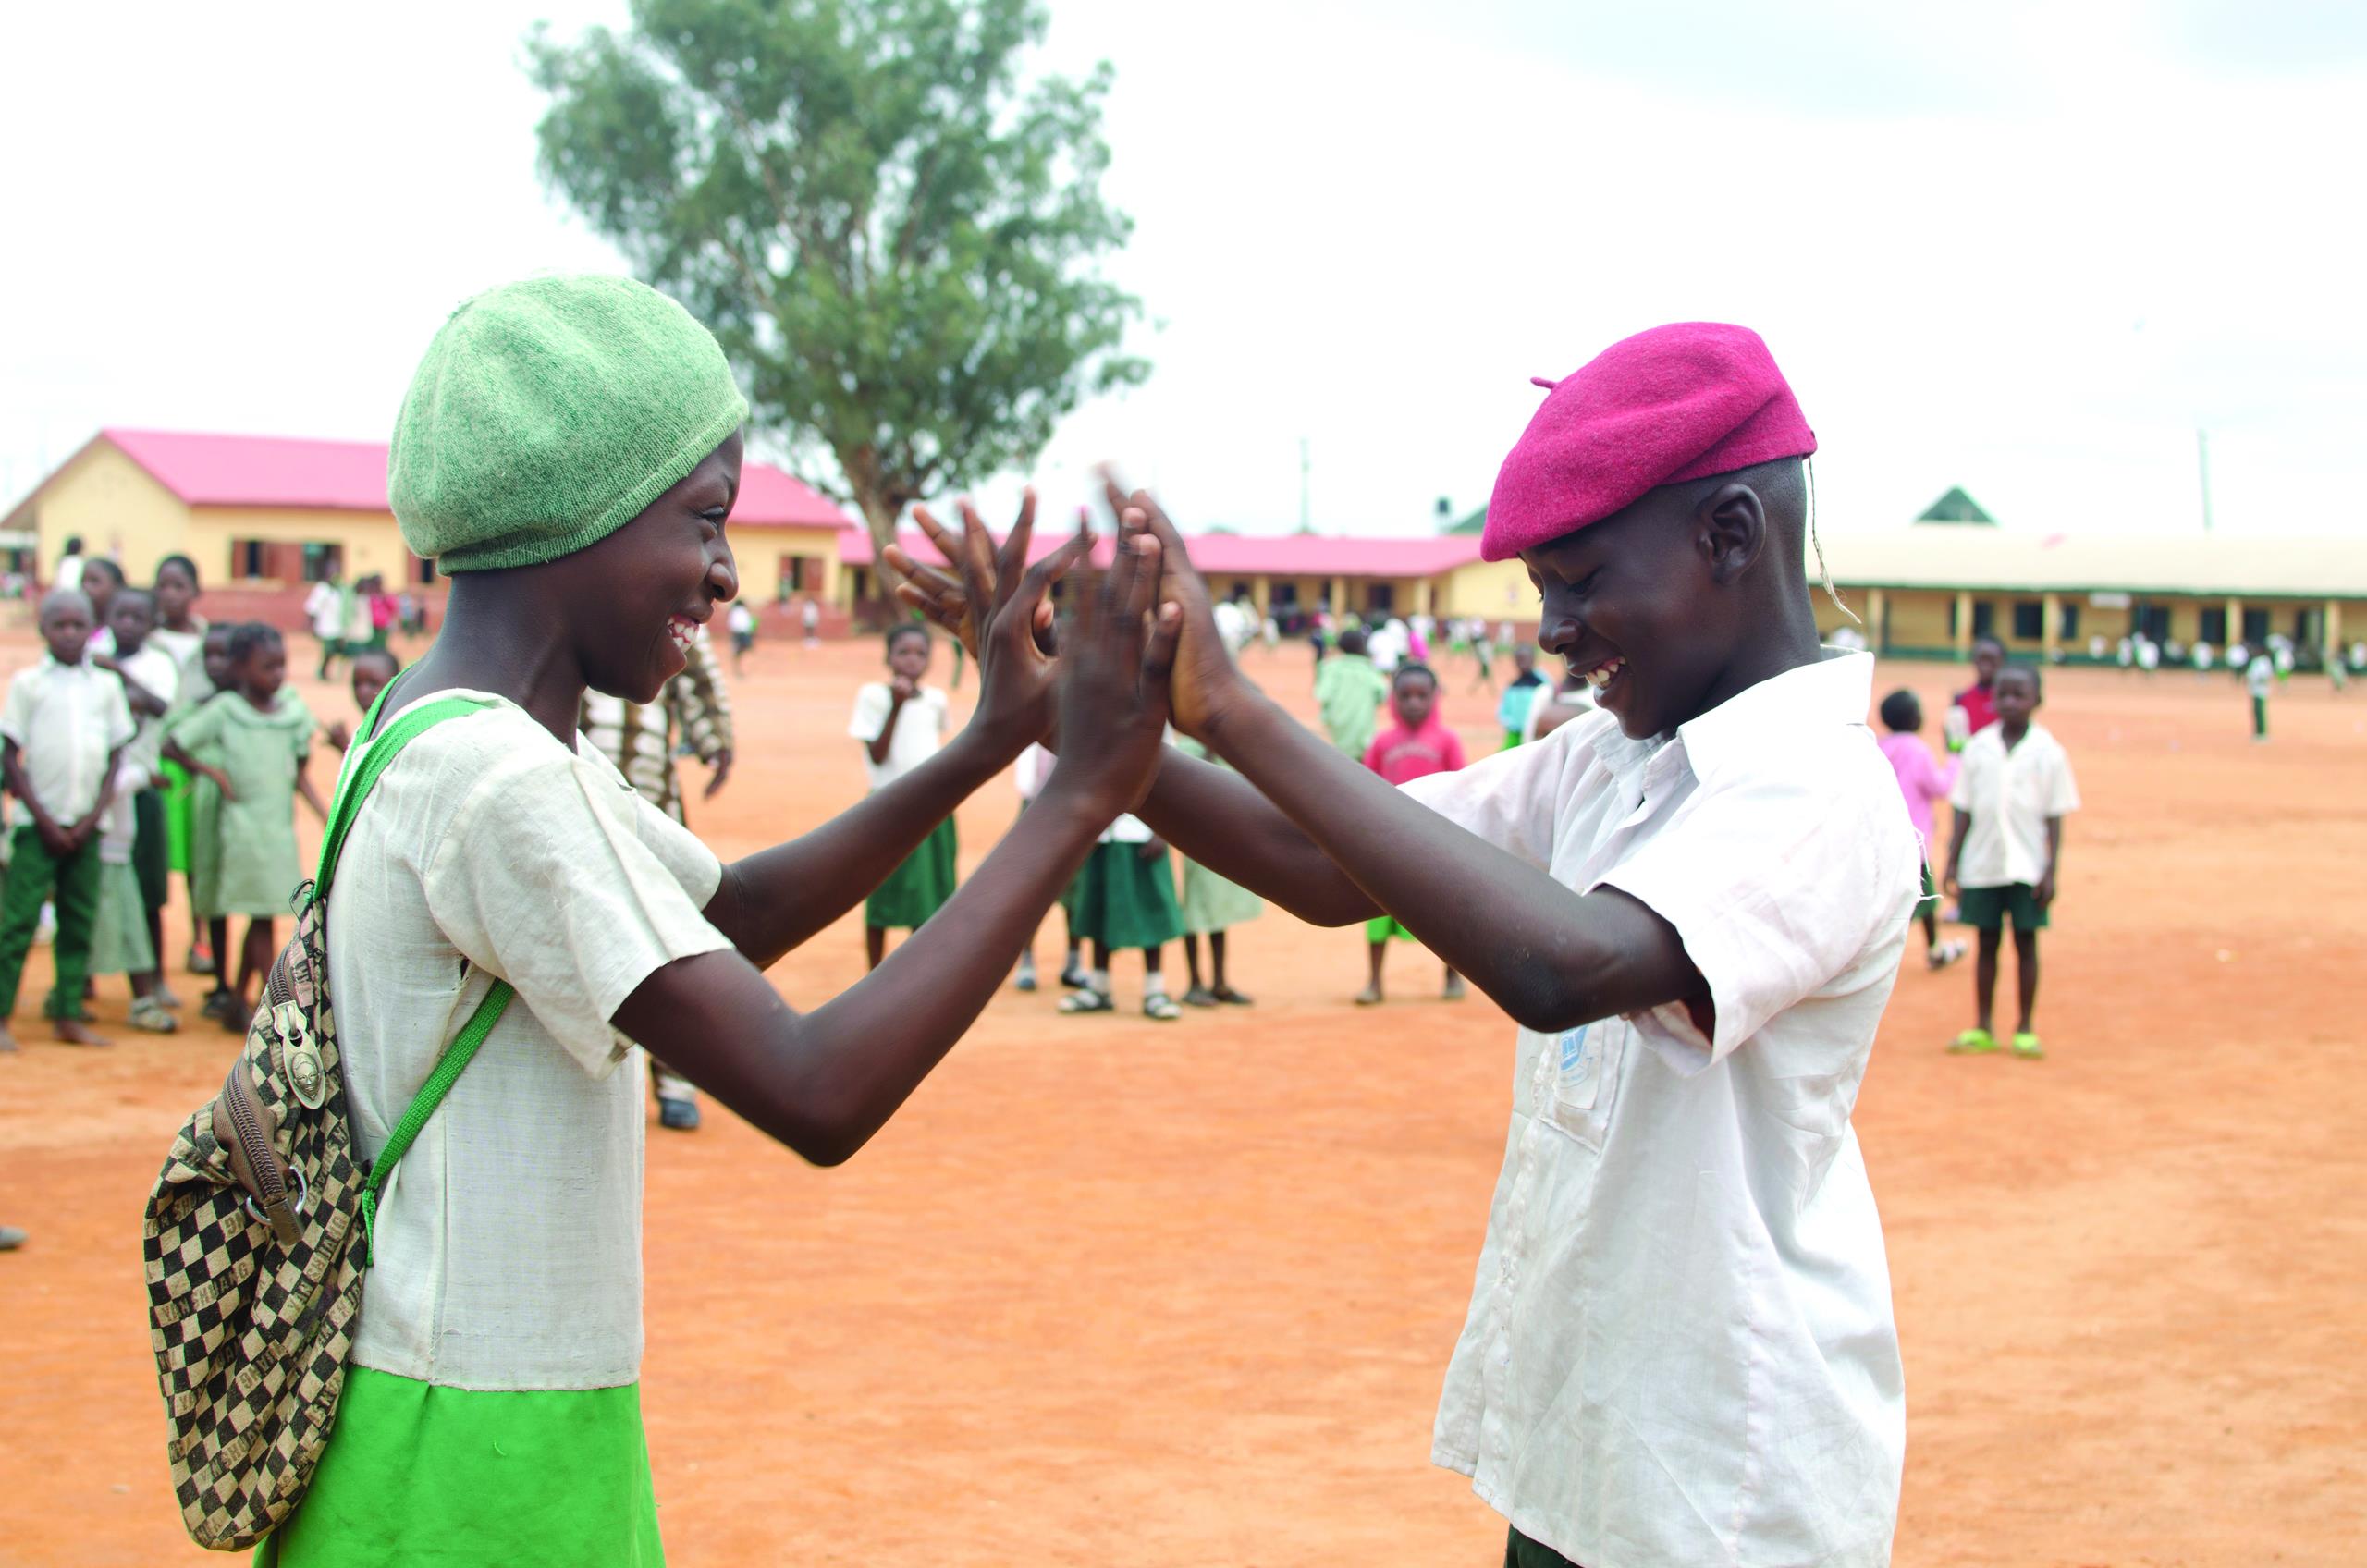 Smiling children playing in Nigeria